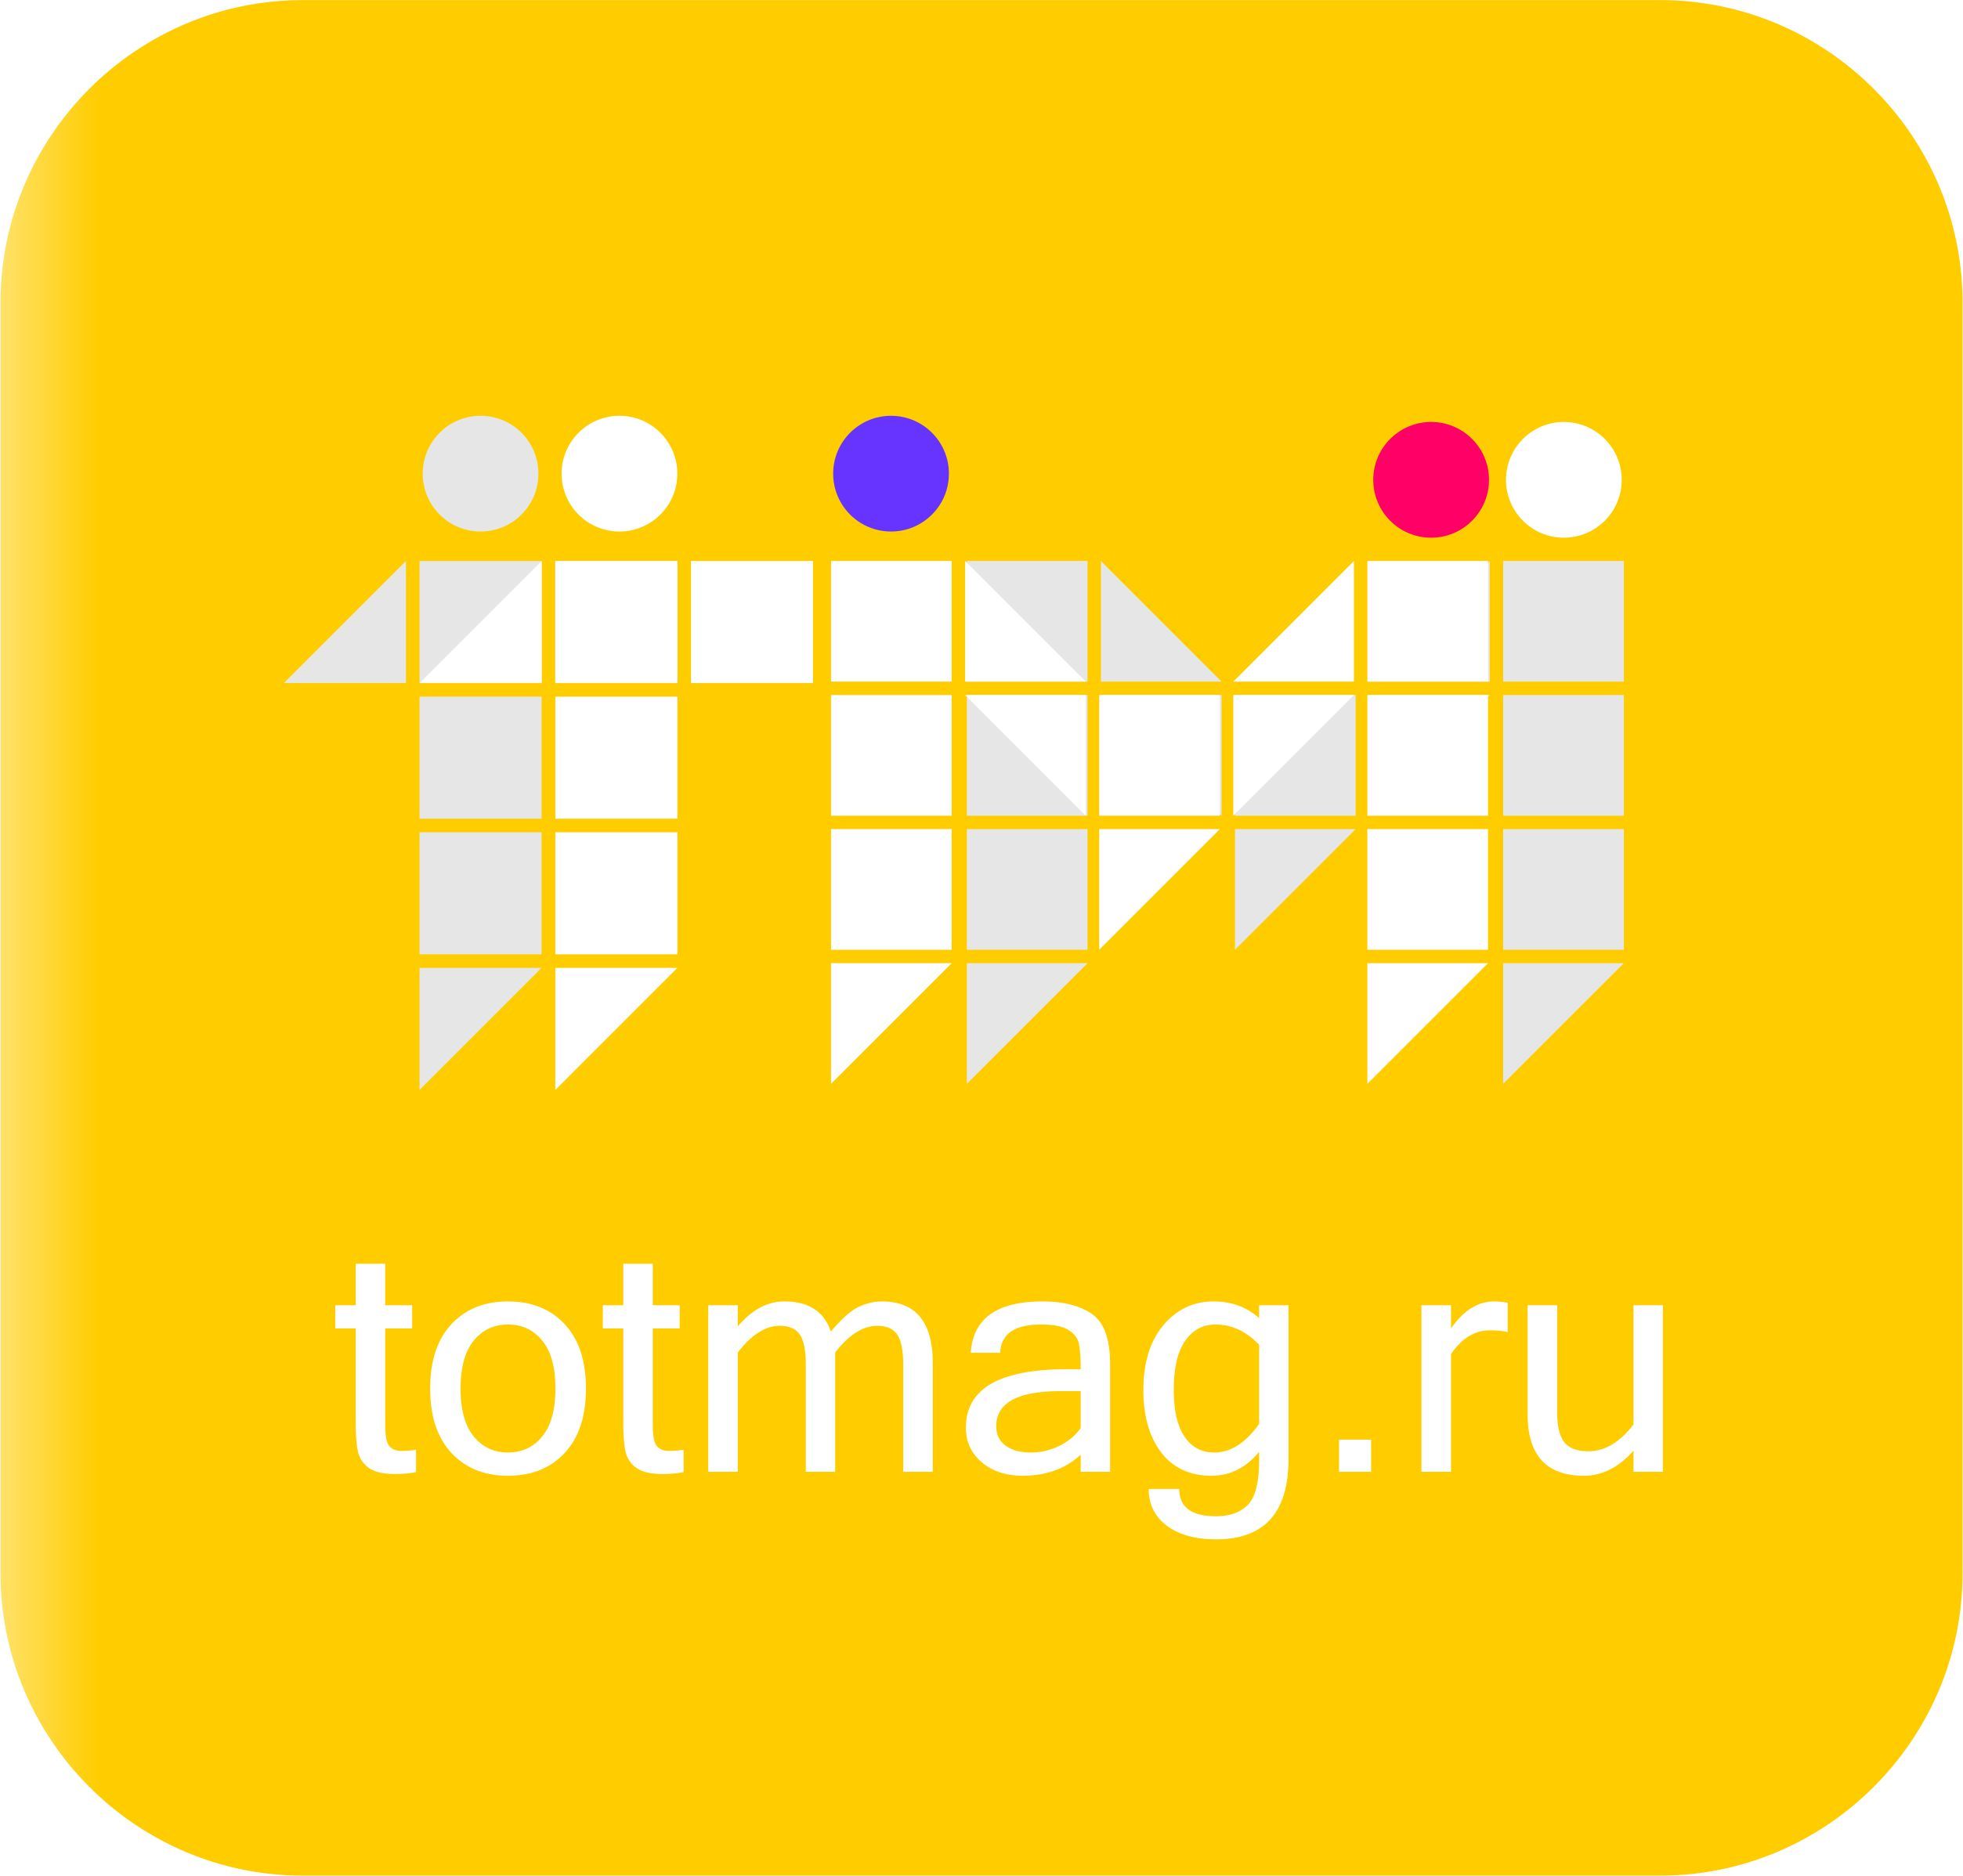 Логотип для интернет магазина totmag.ru - дизайнер visento